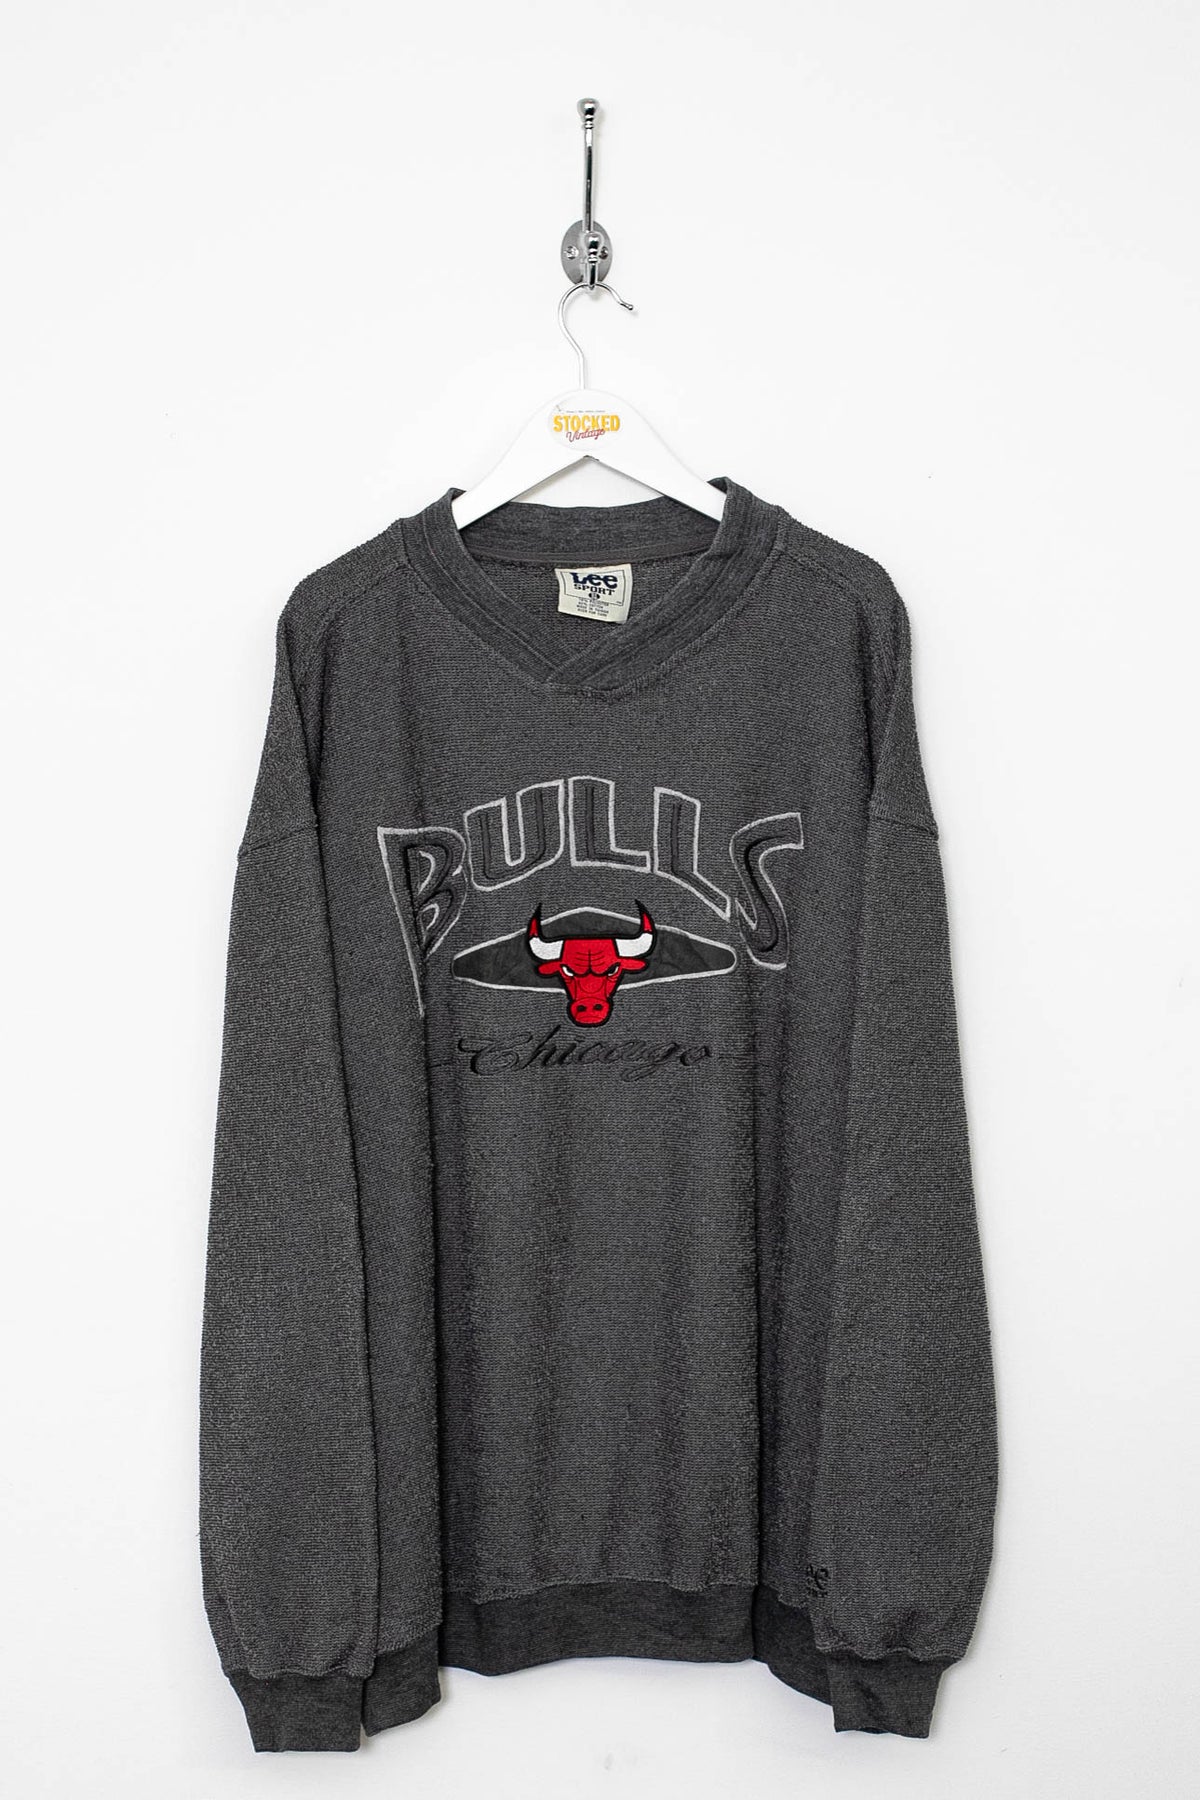 00s NBA Chicago Bulls Sweatshirt (XL)